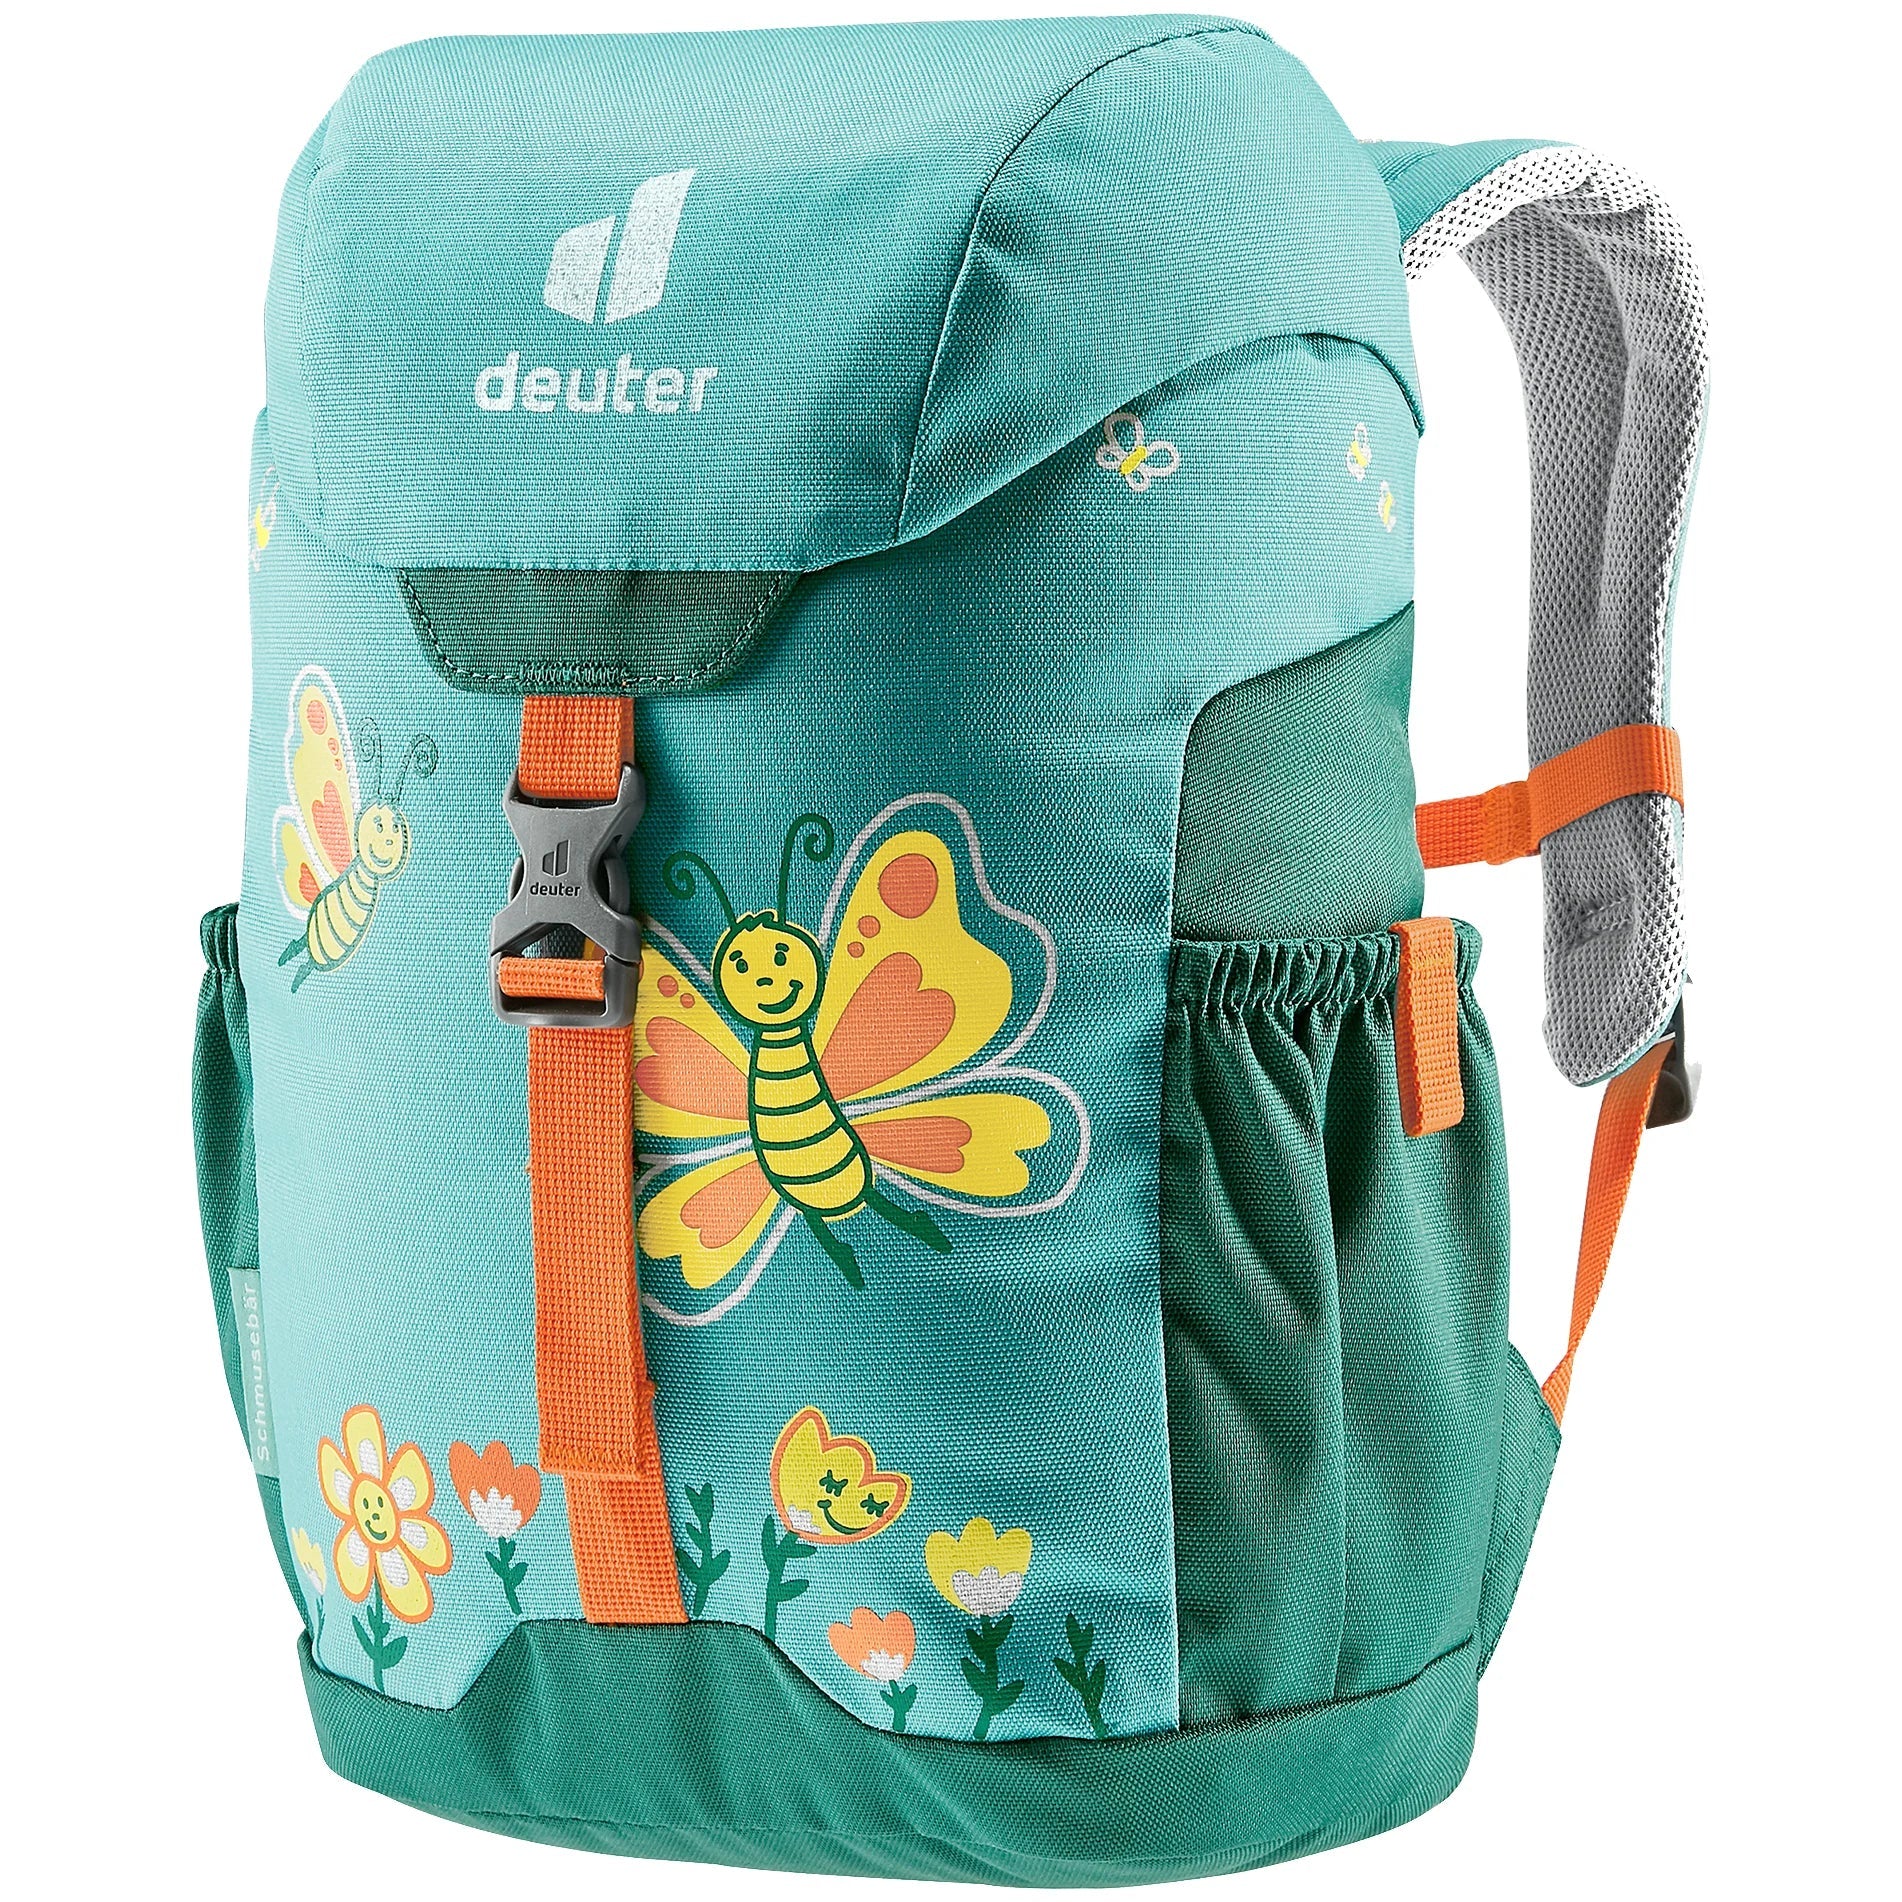 Deuter Daypack Schmusebär sac à dos enfant 33 cm - Dustblue-Alpinegreen